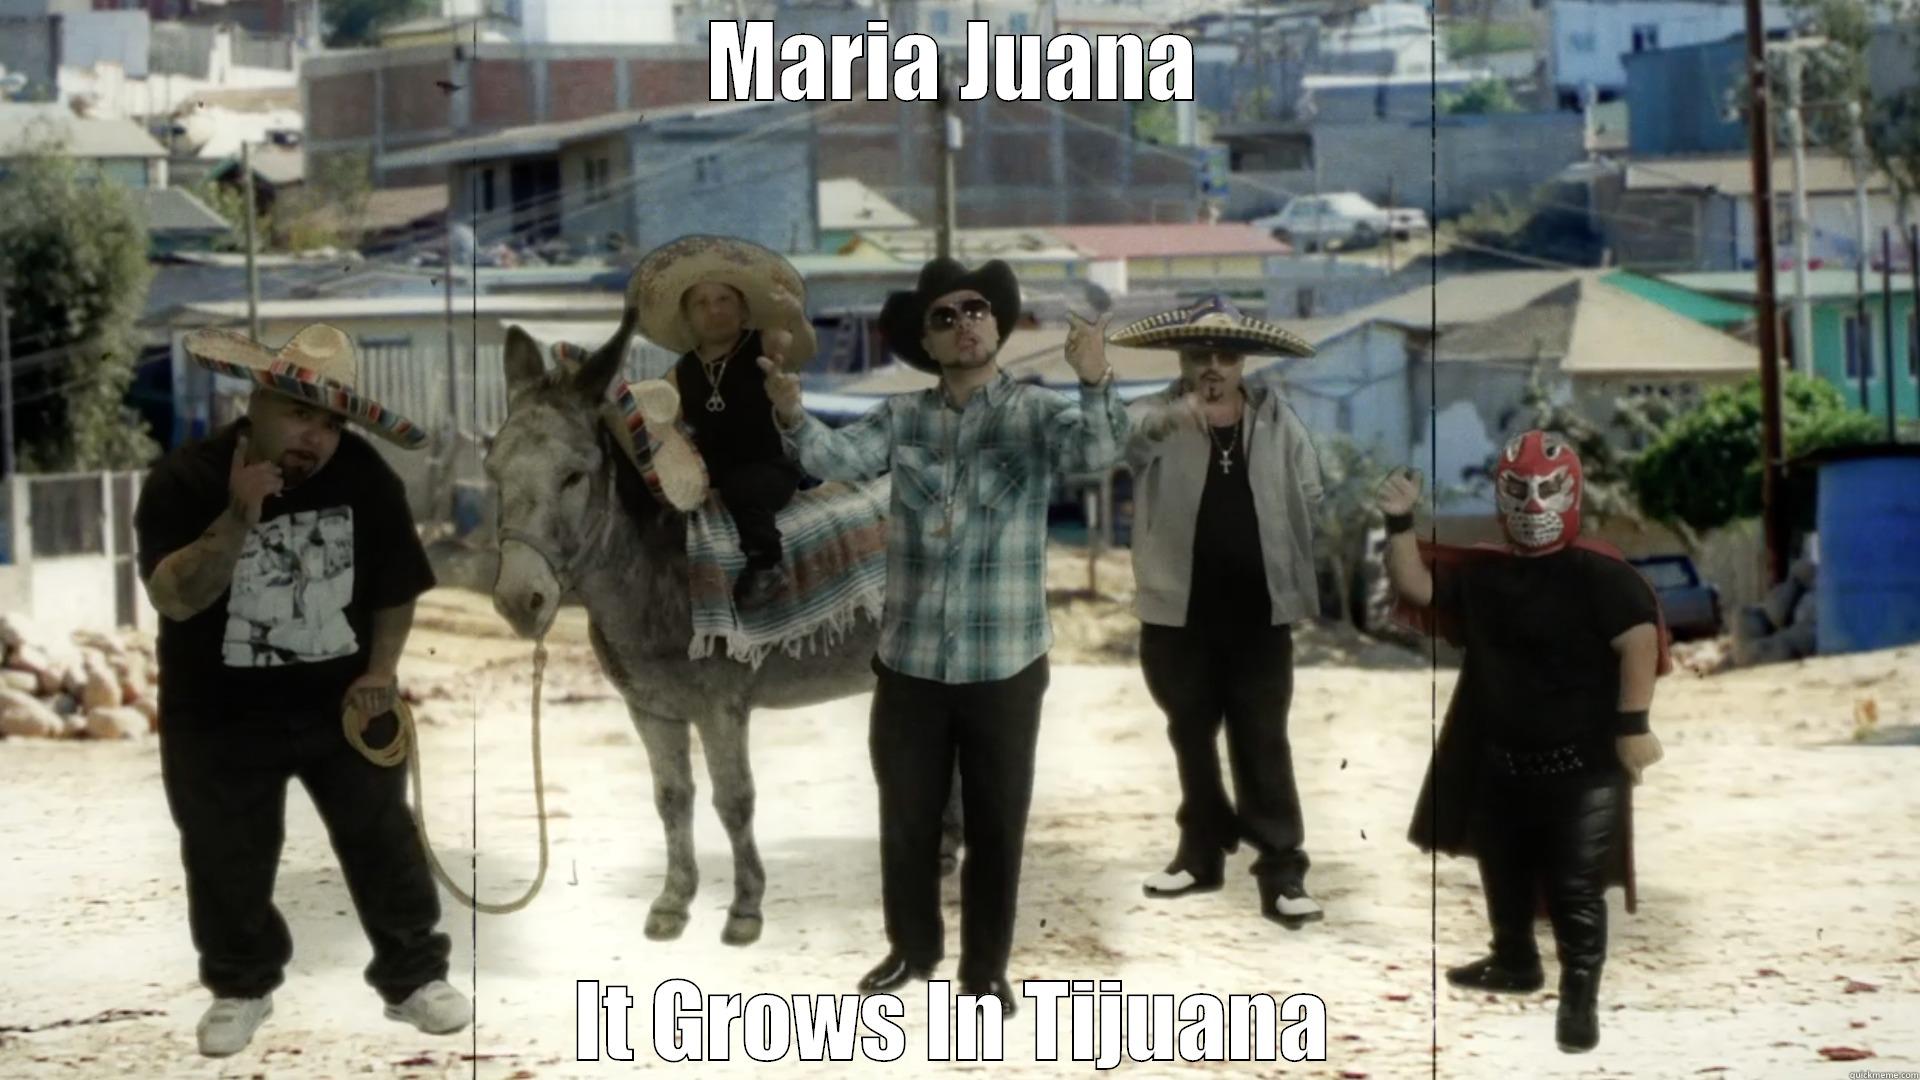 Pics from Maria Juana video shoot featuring Chingo Bling, Baby Bash, Down AKA Kilo, Big Tank Boss
https://www.youtube.com/watch?v=GmjWS8Qt5nM